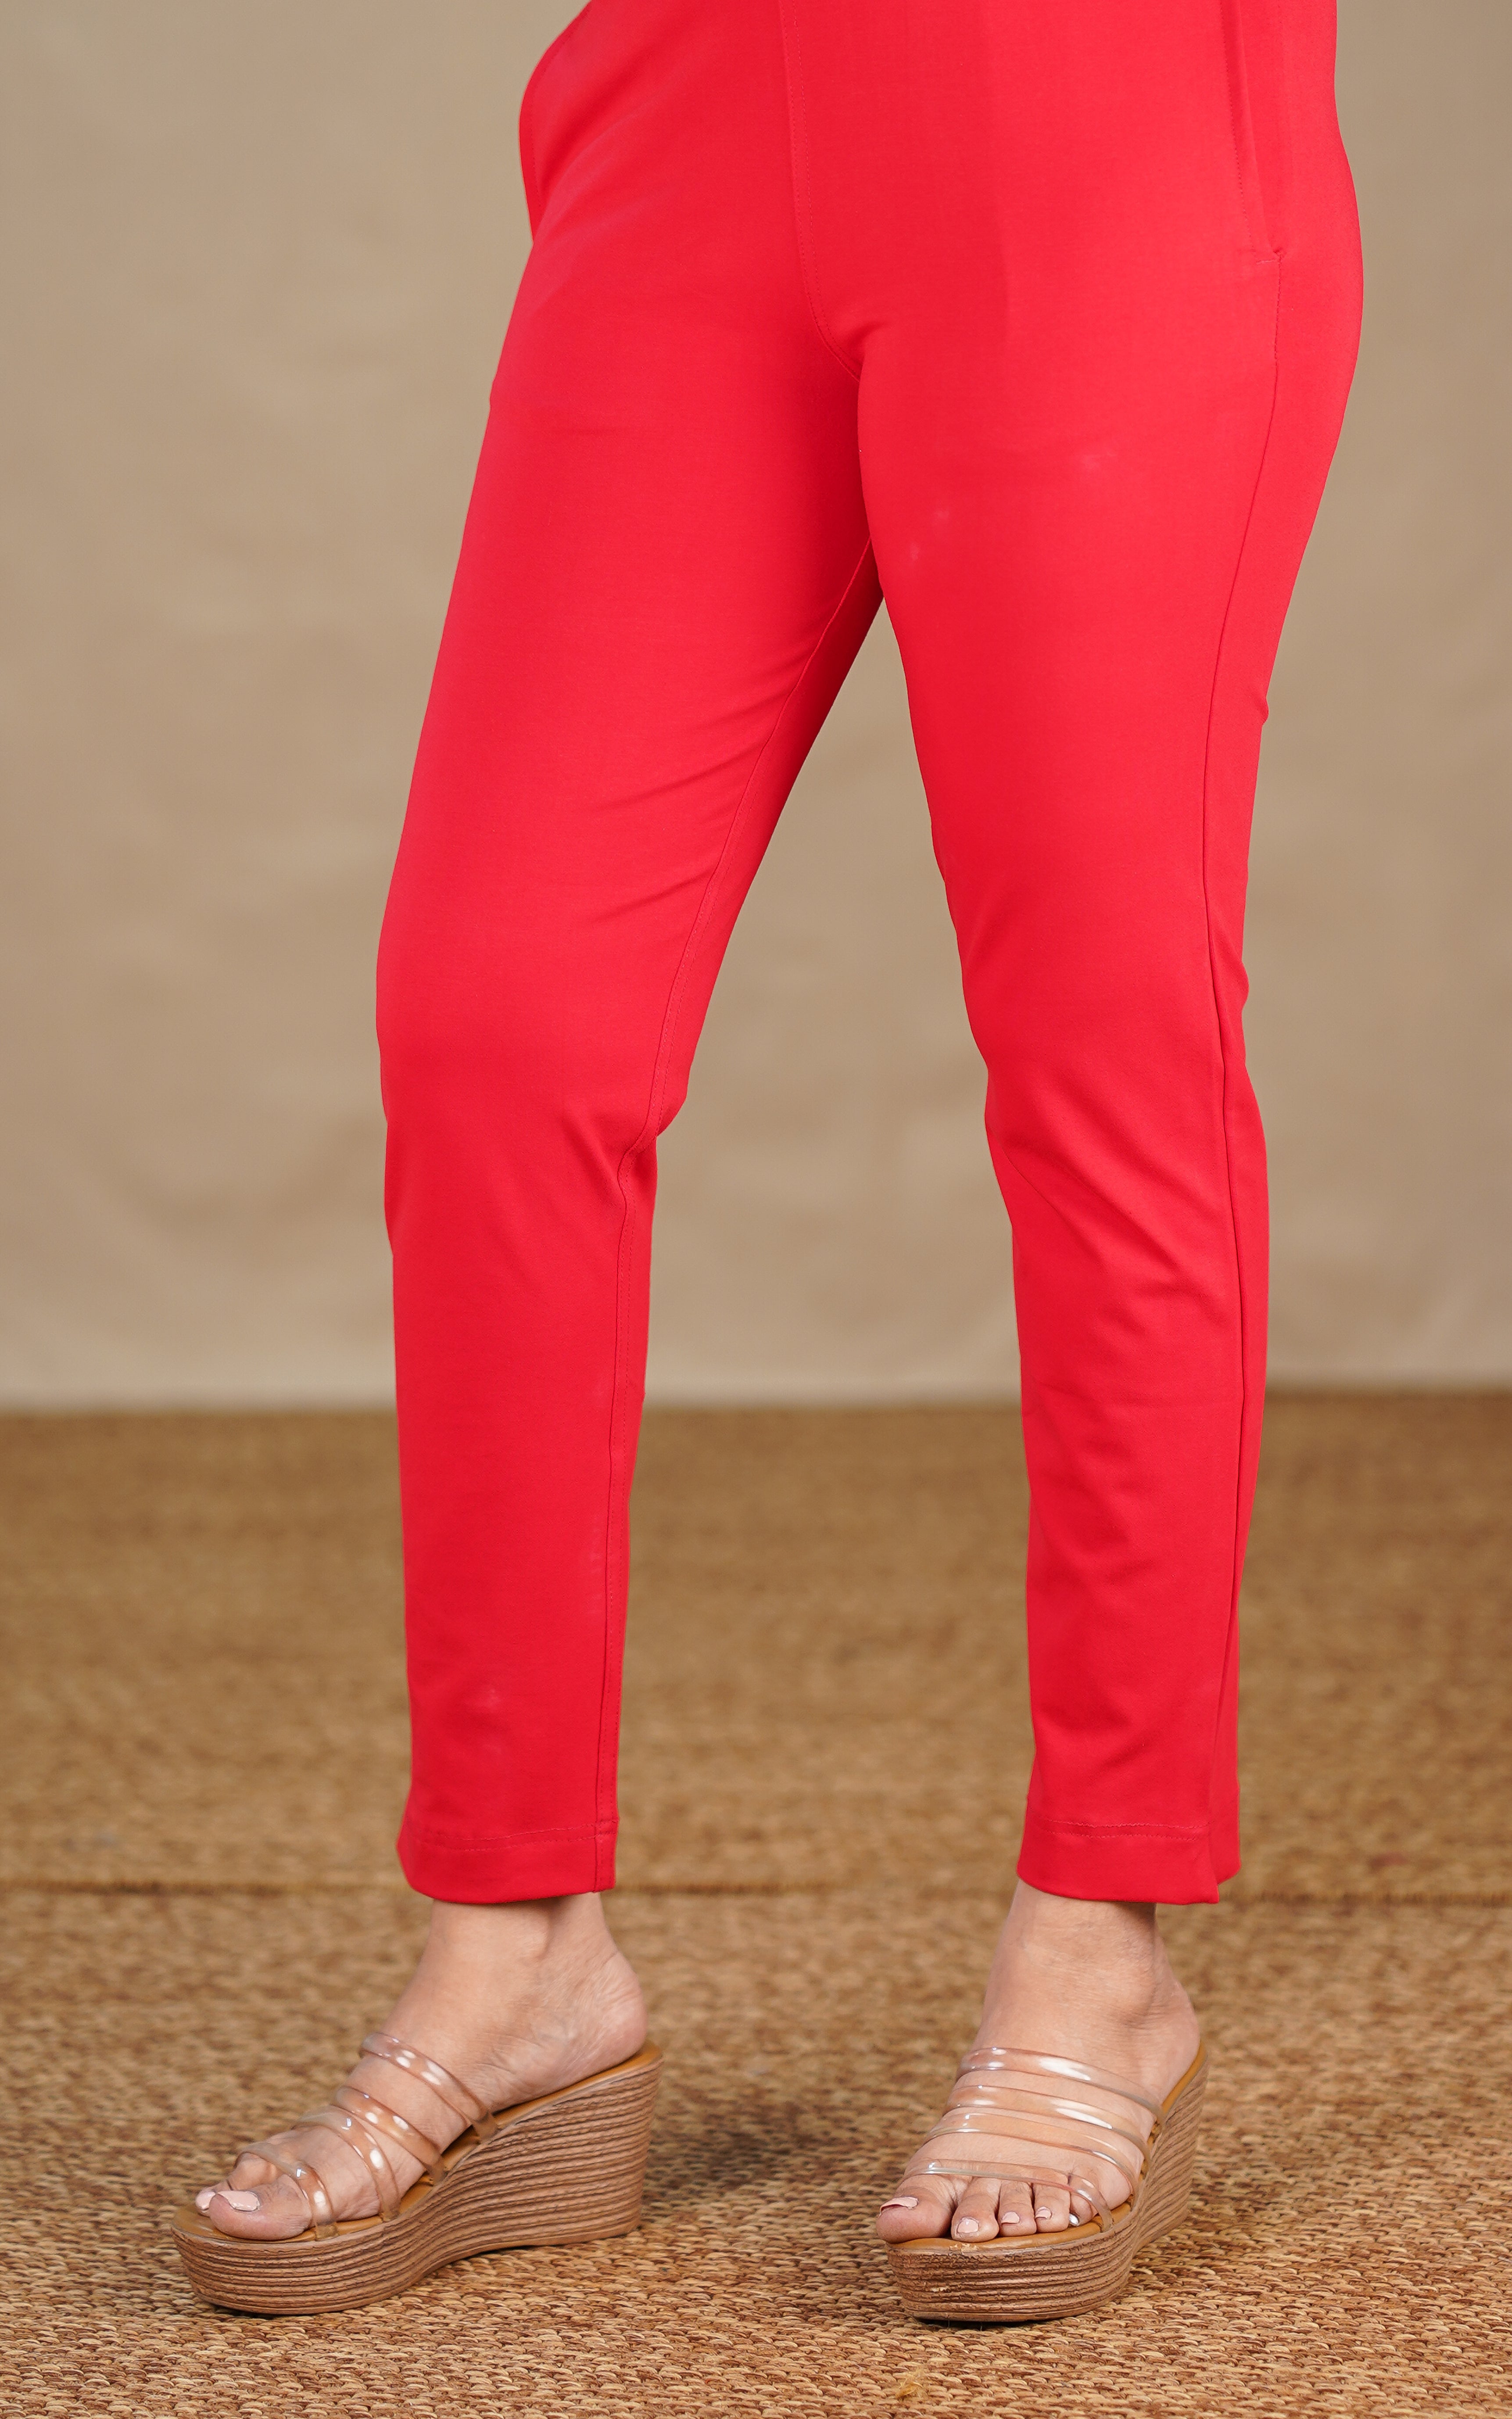 Buy Geat Cotton Women's 4 Way Chudidar Leggings For Kurtis Cotton, Size:  Free Size (White) at Amazon.in